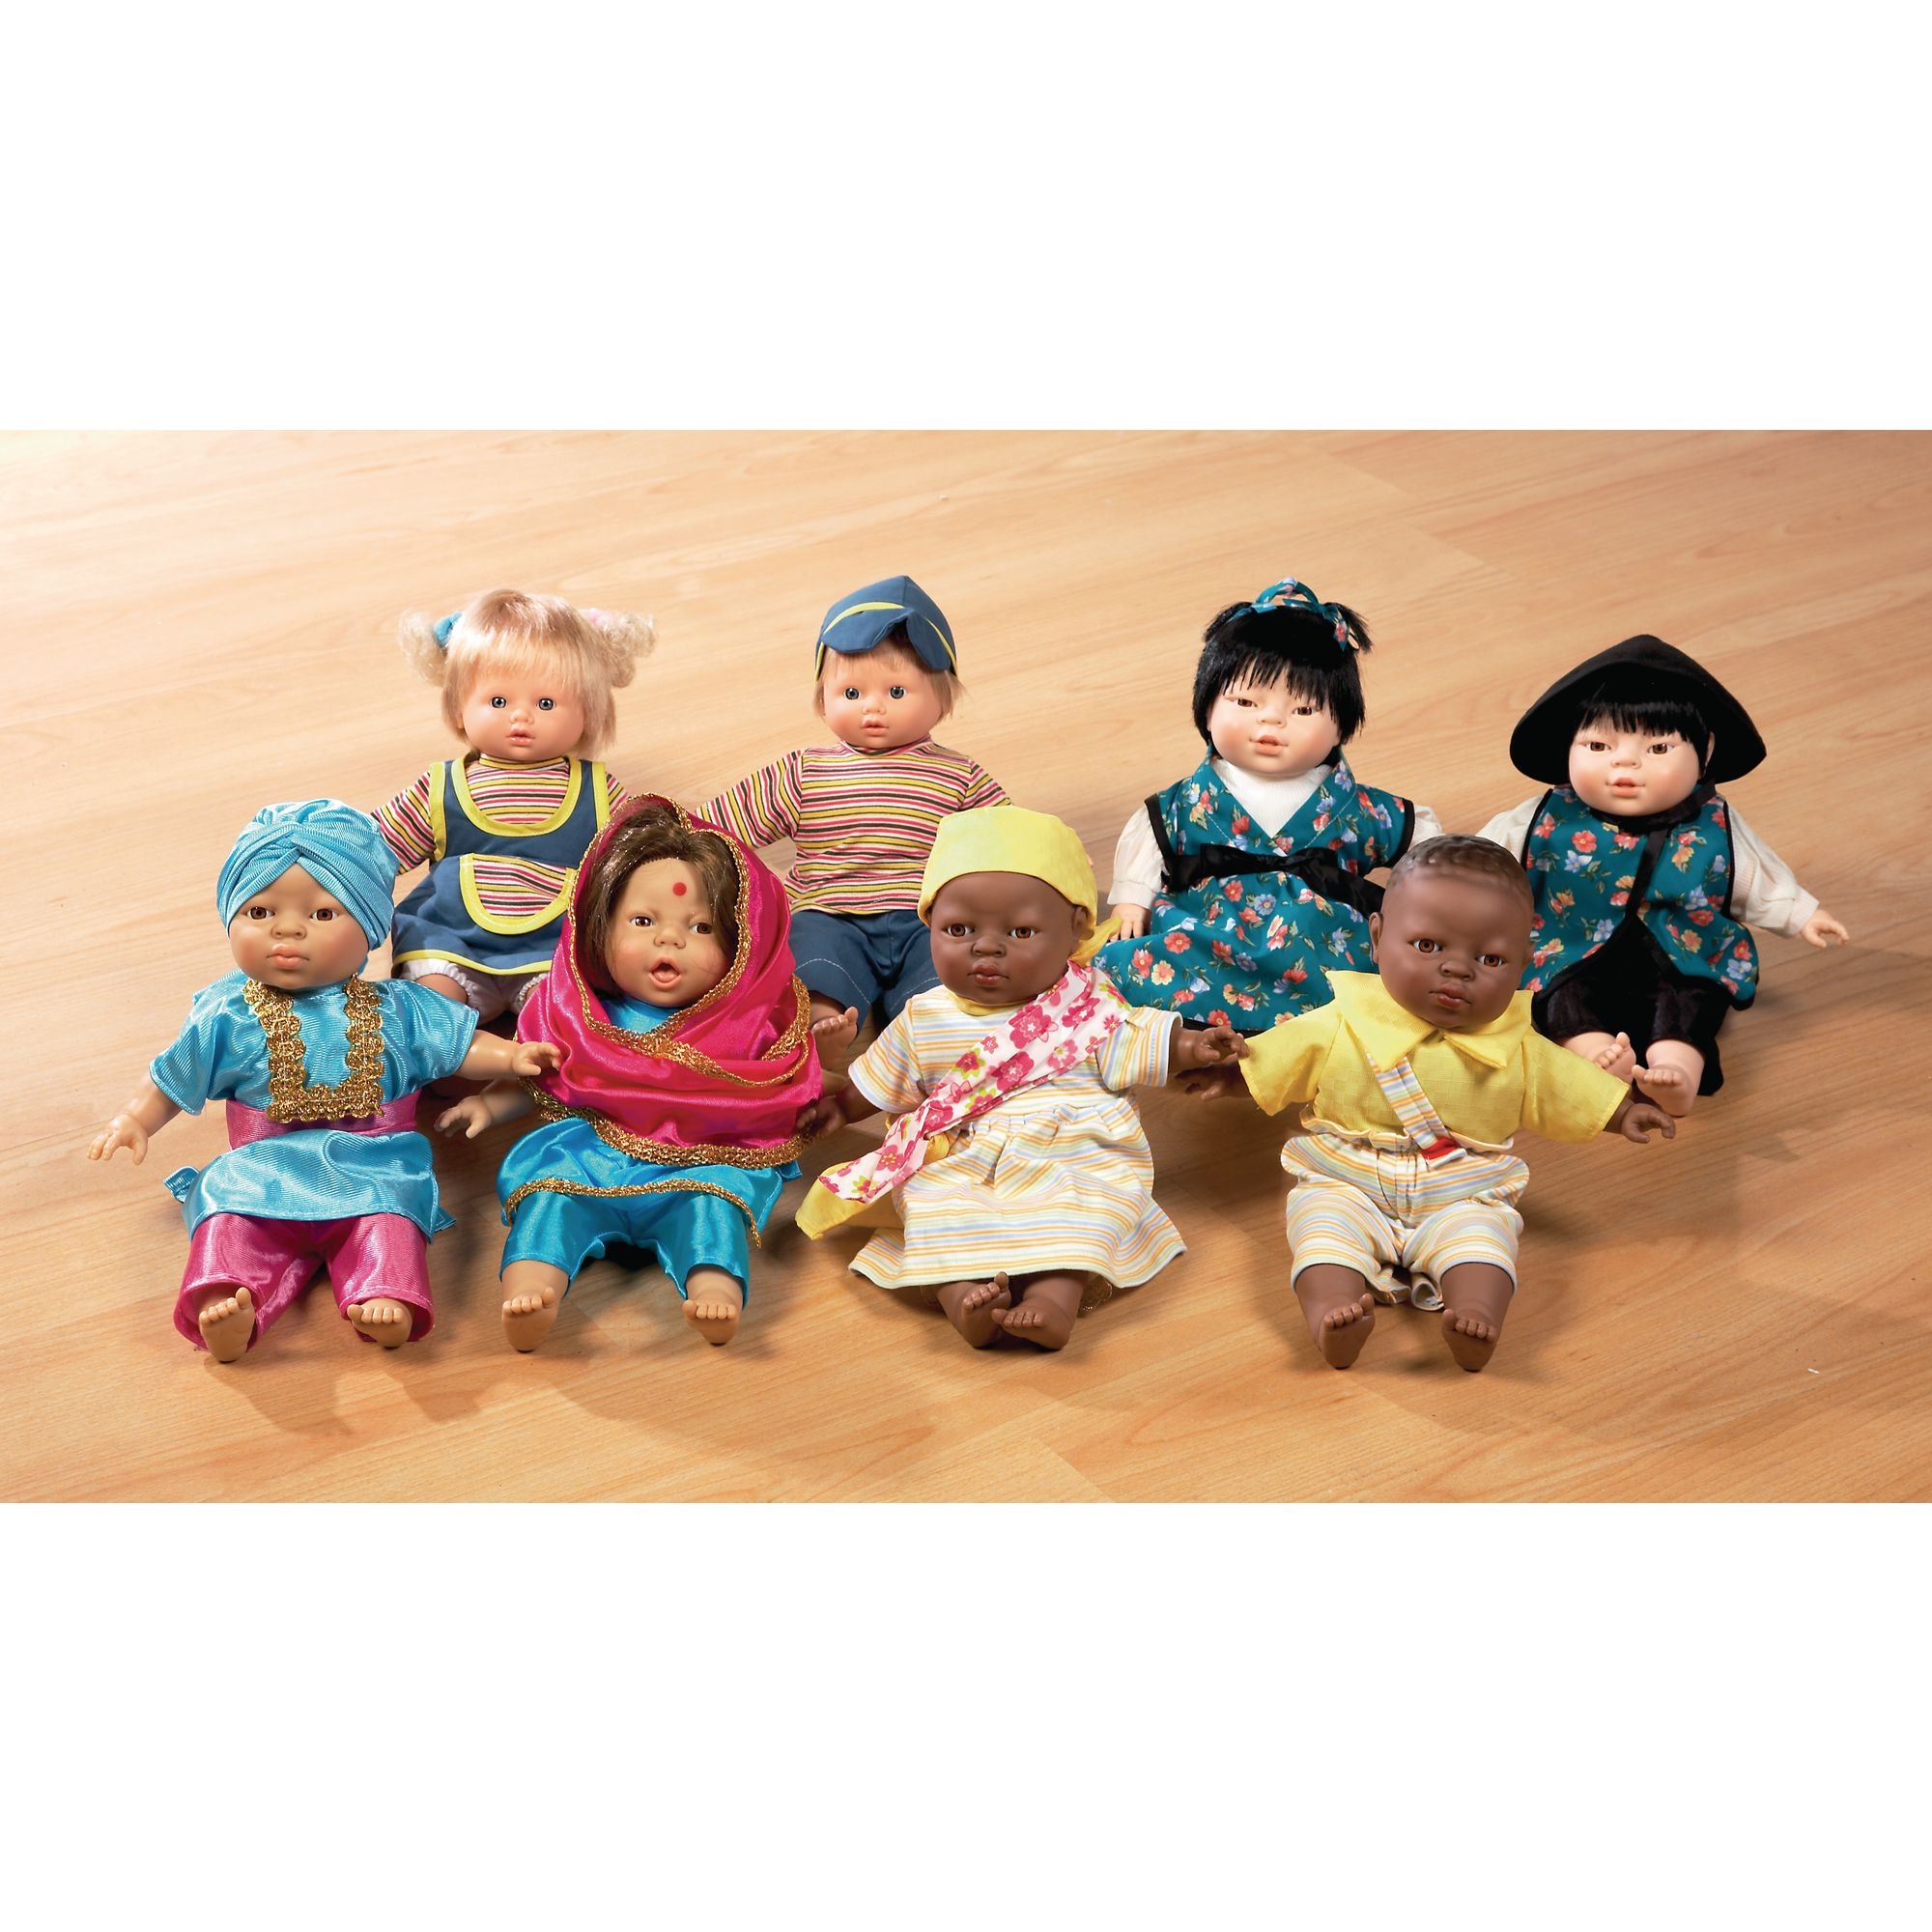 Children of the World Soft-bodied Dolls: Makali and Kanwar